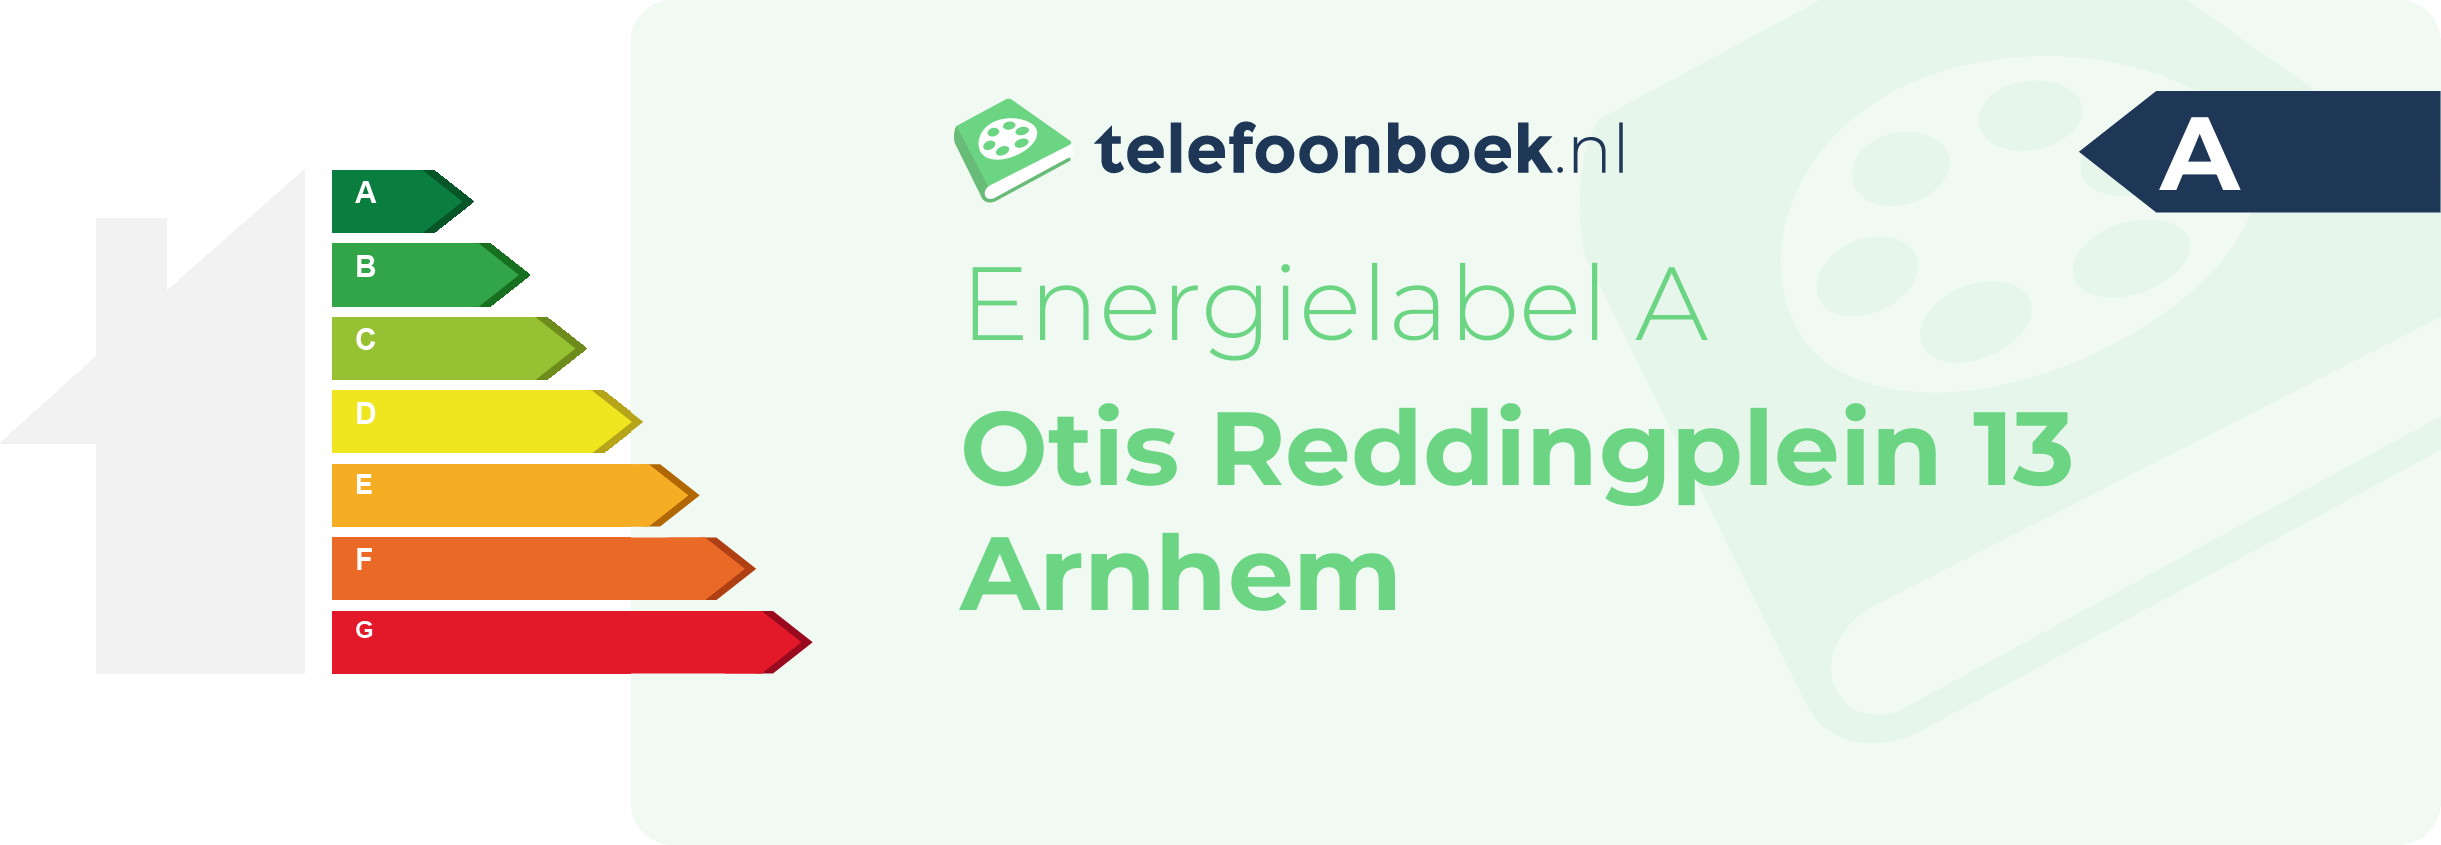 Energielabel Otis Reddingplein 13 Arnhem